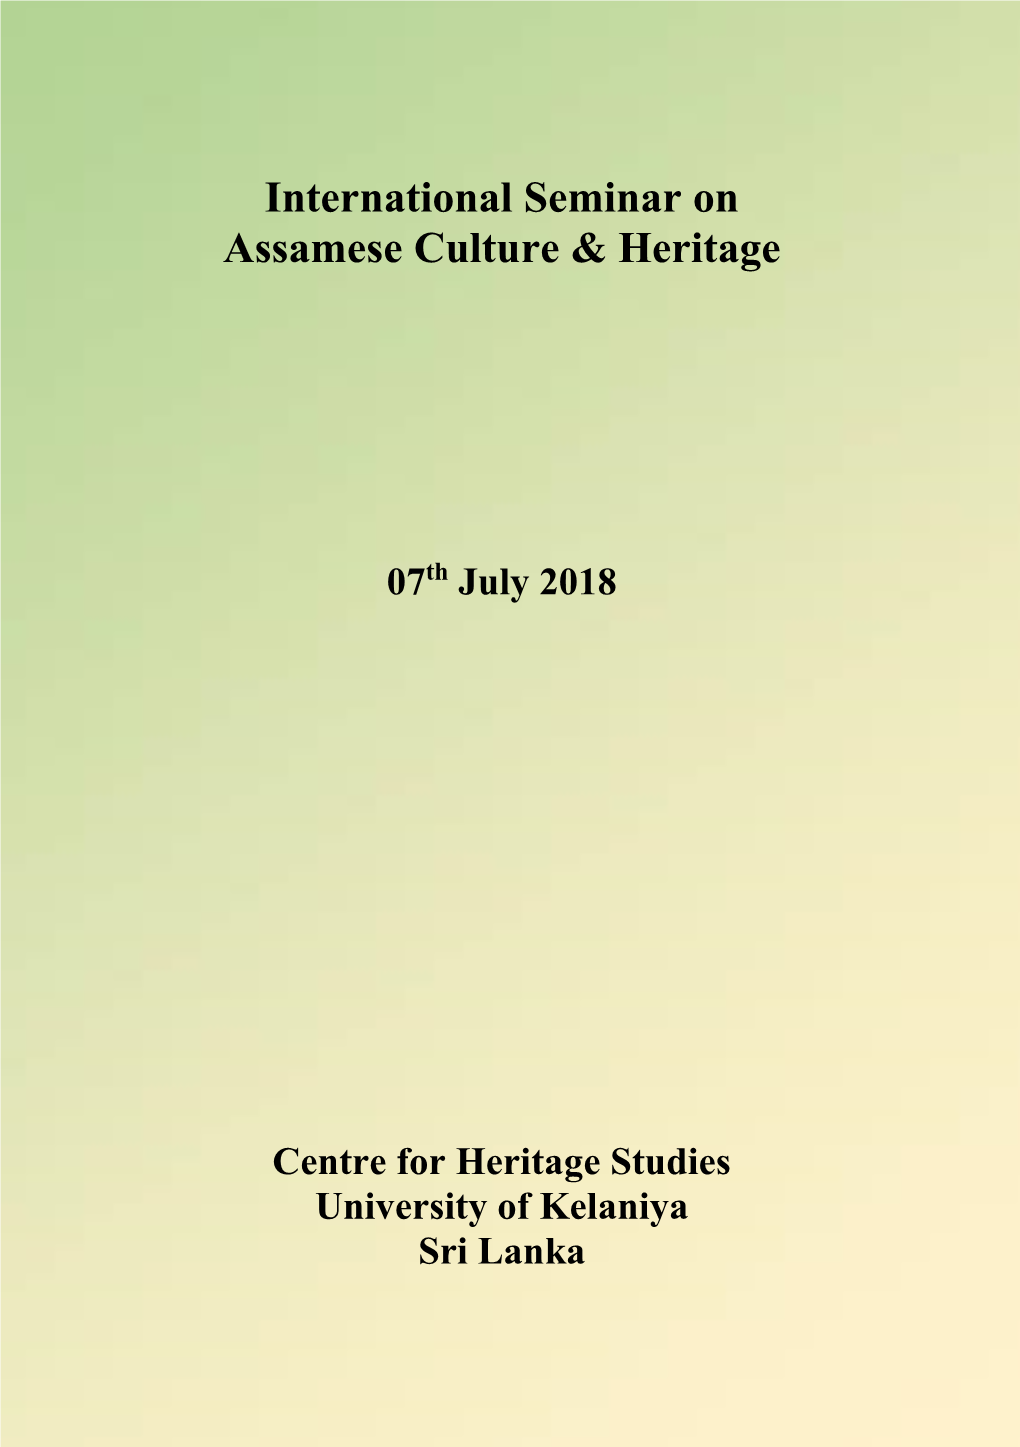 International Seminar on Assamese Culture & Heritage